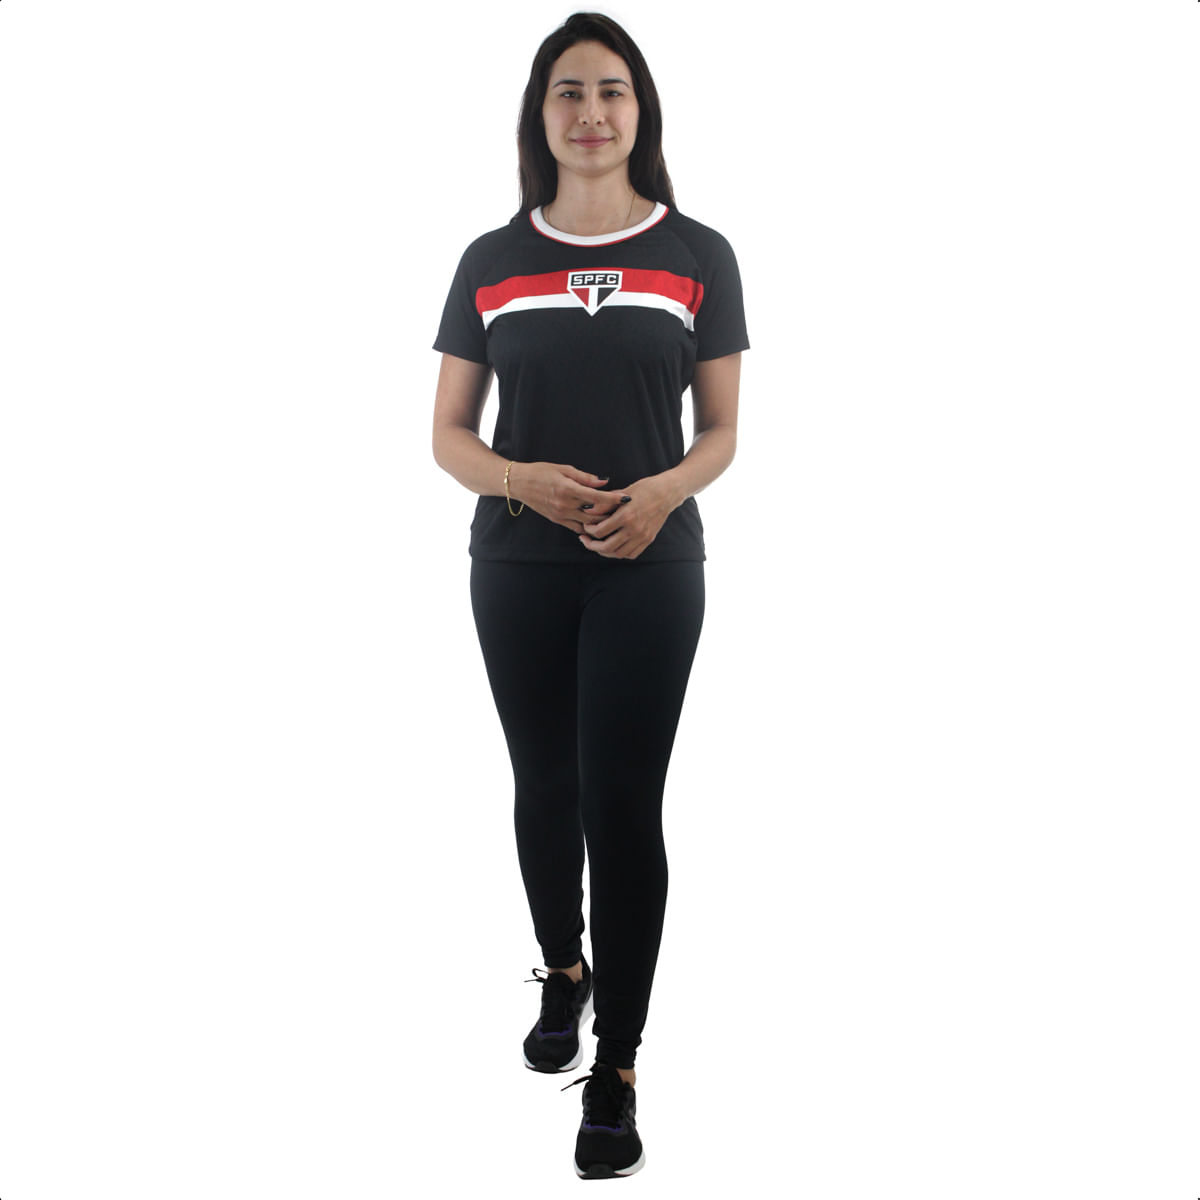 Camiseta Spelaion Cor Preta - Camiseta Feminina - Magazine Luiza